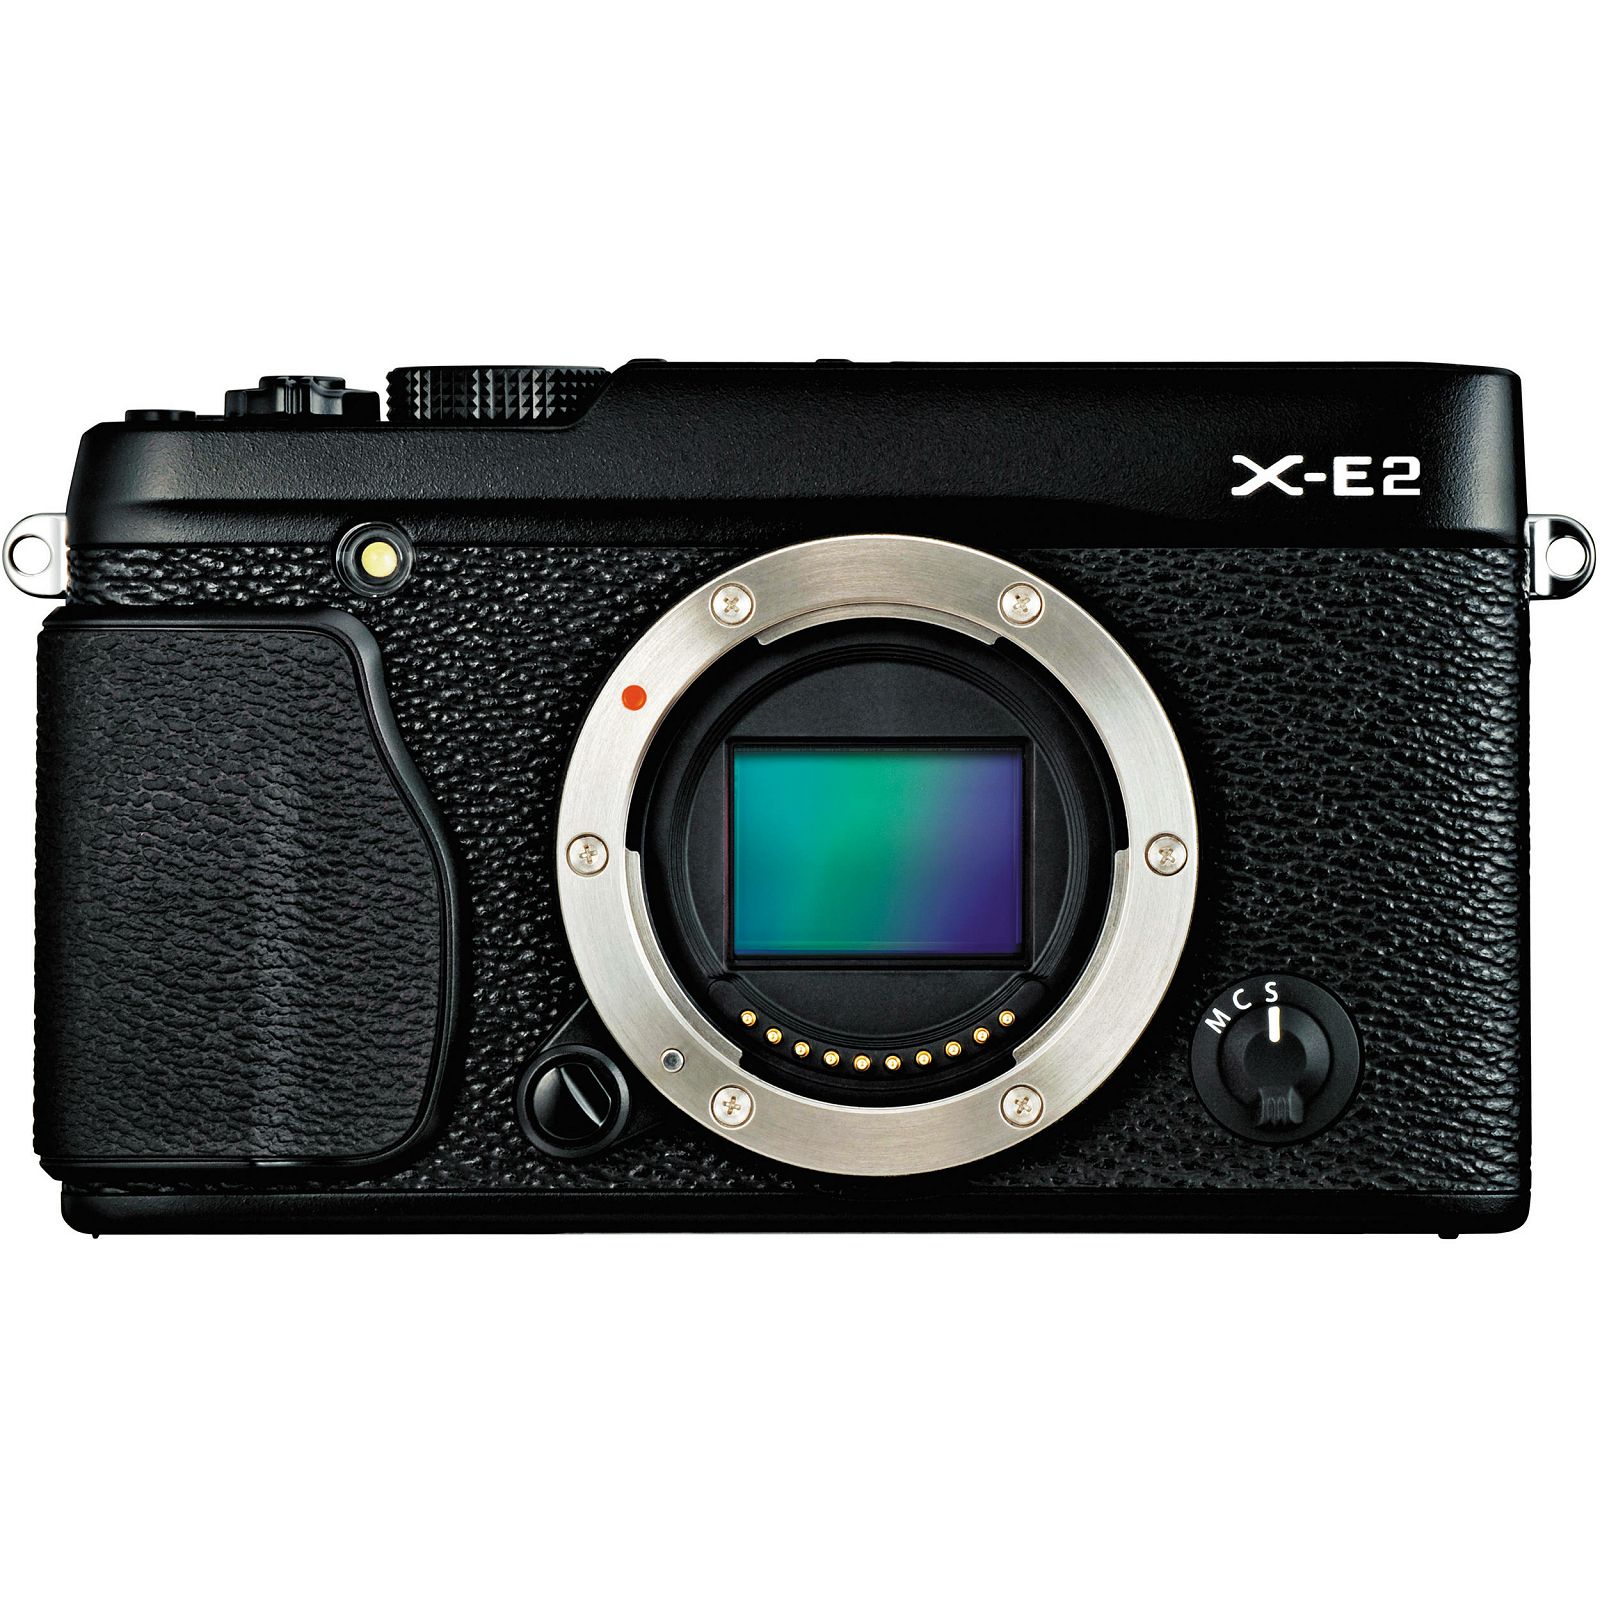 Fujifilm X-E2 Body Black crni Digitalni fotoaparat Mirrorless camera Fuji Finepix XE2